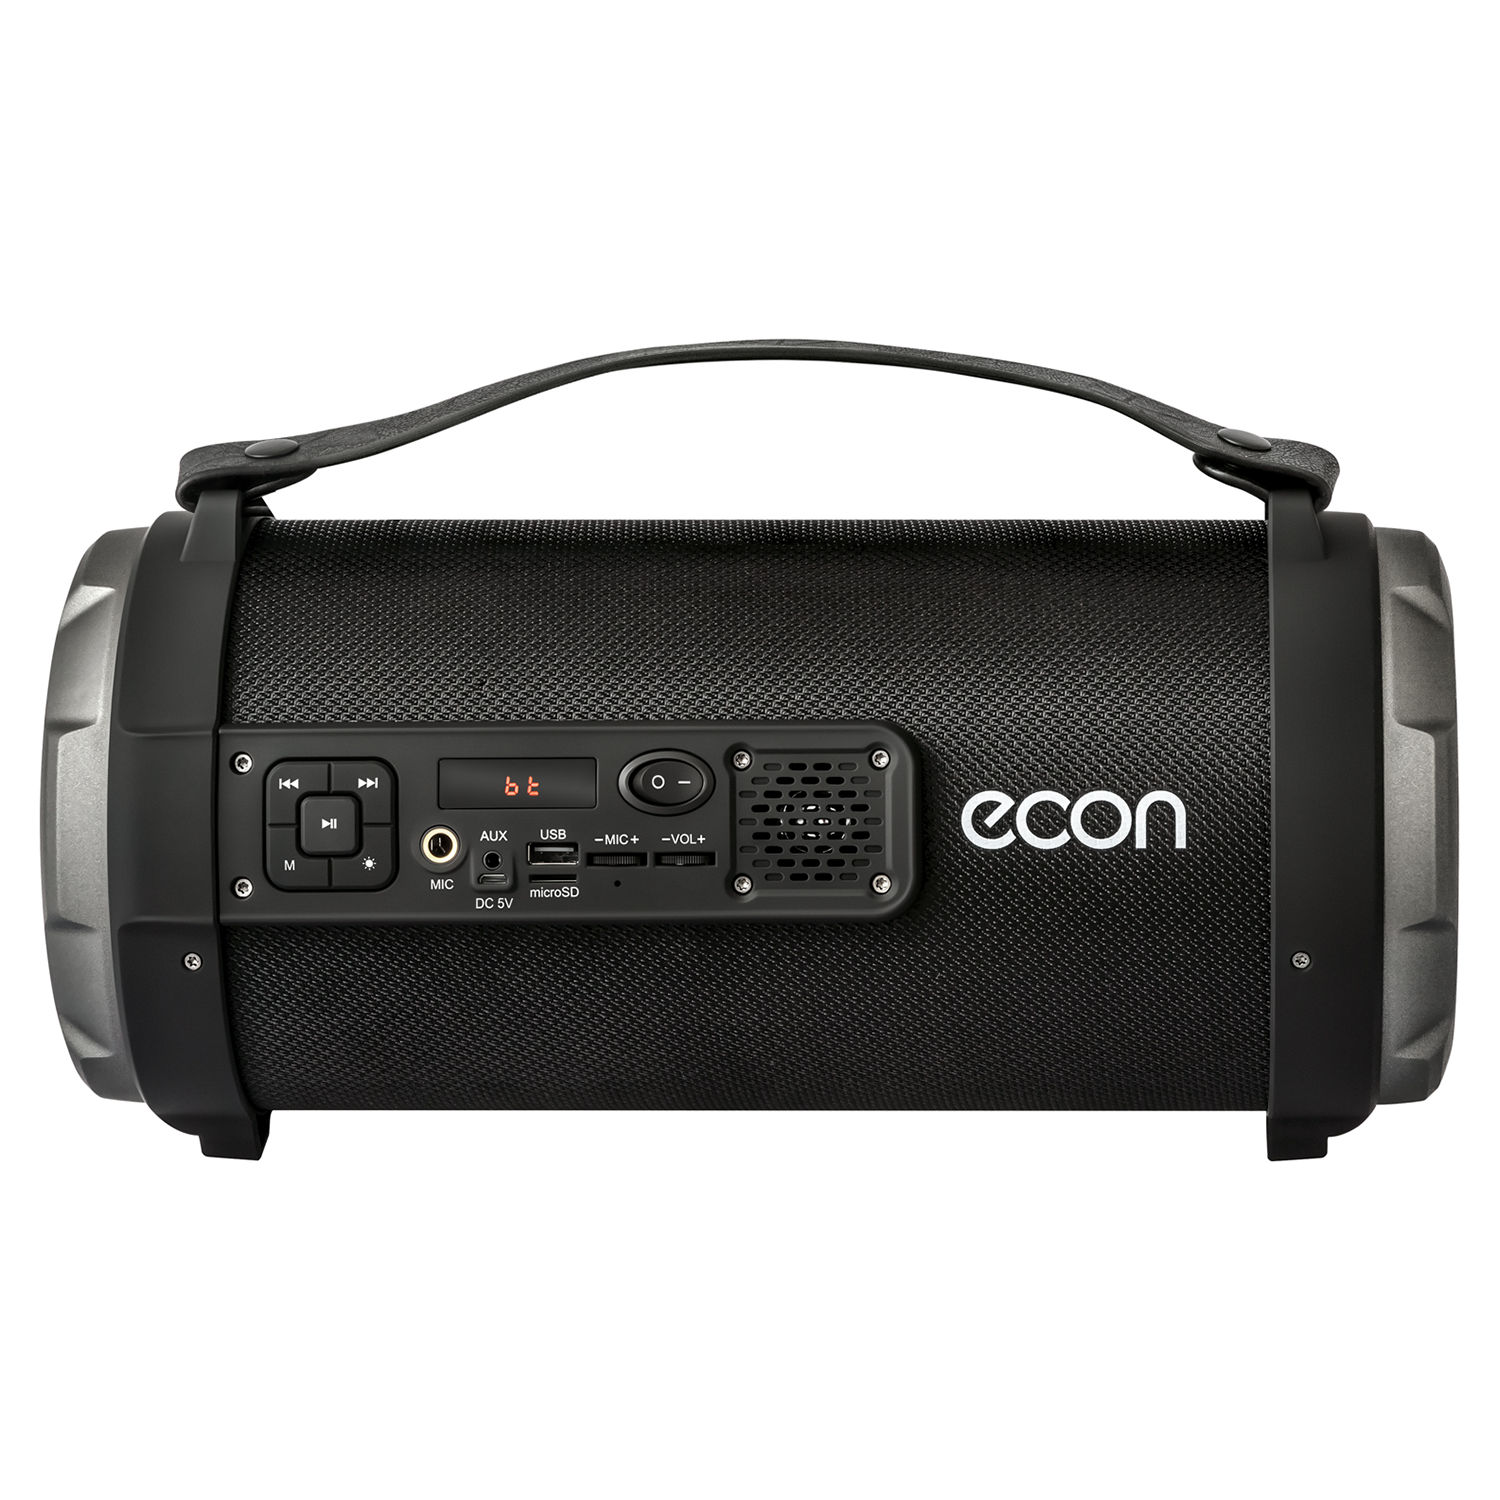 Портативная аудиосистема ECON EPS-150